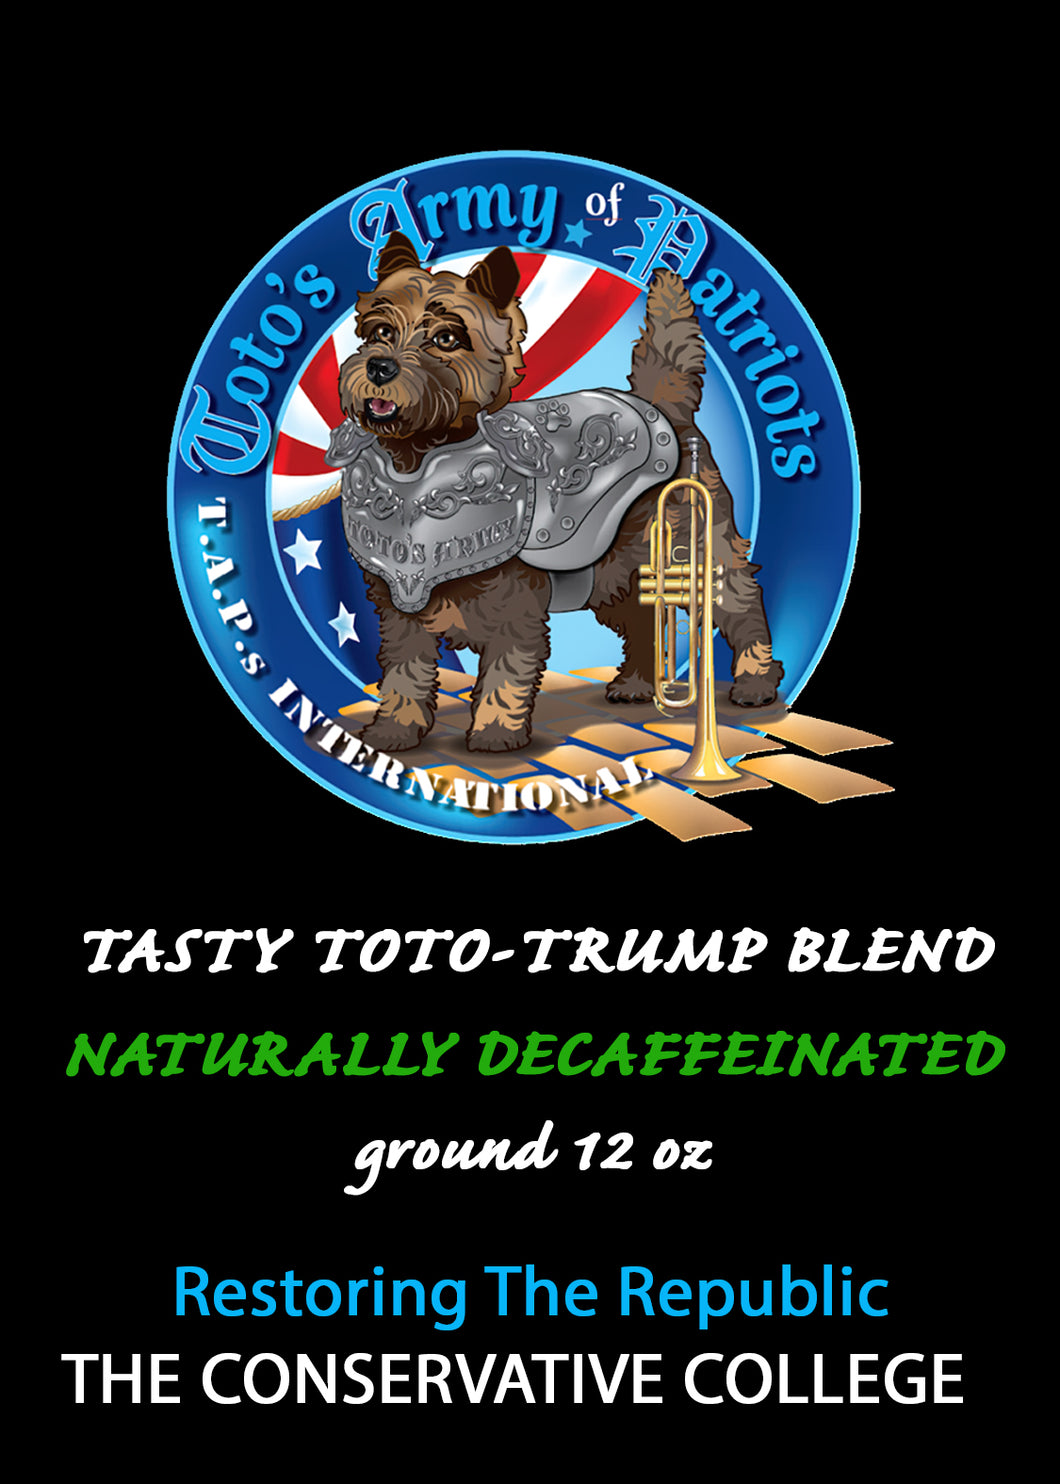 Tasty Toto Naturally Decaffeinated 12oz